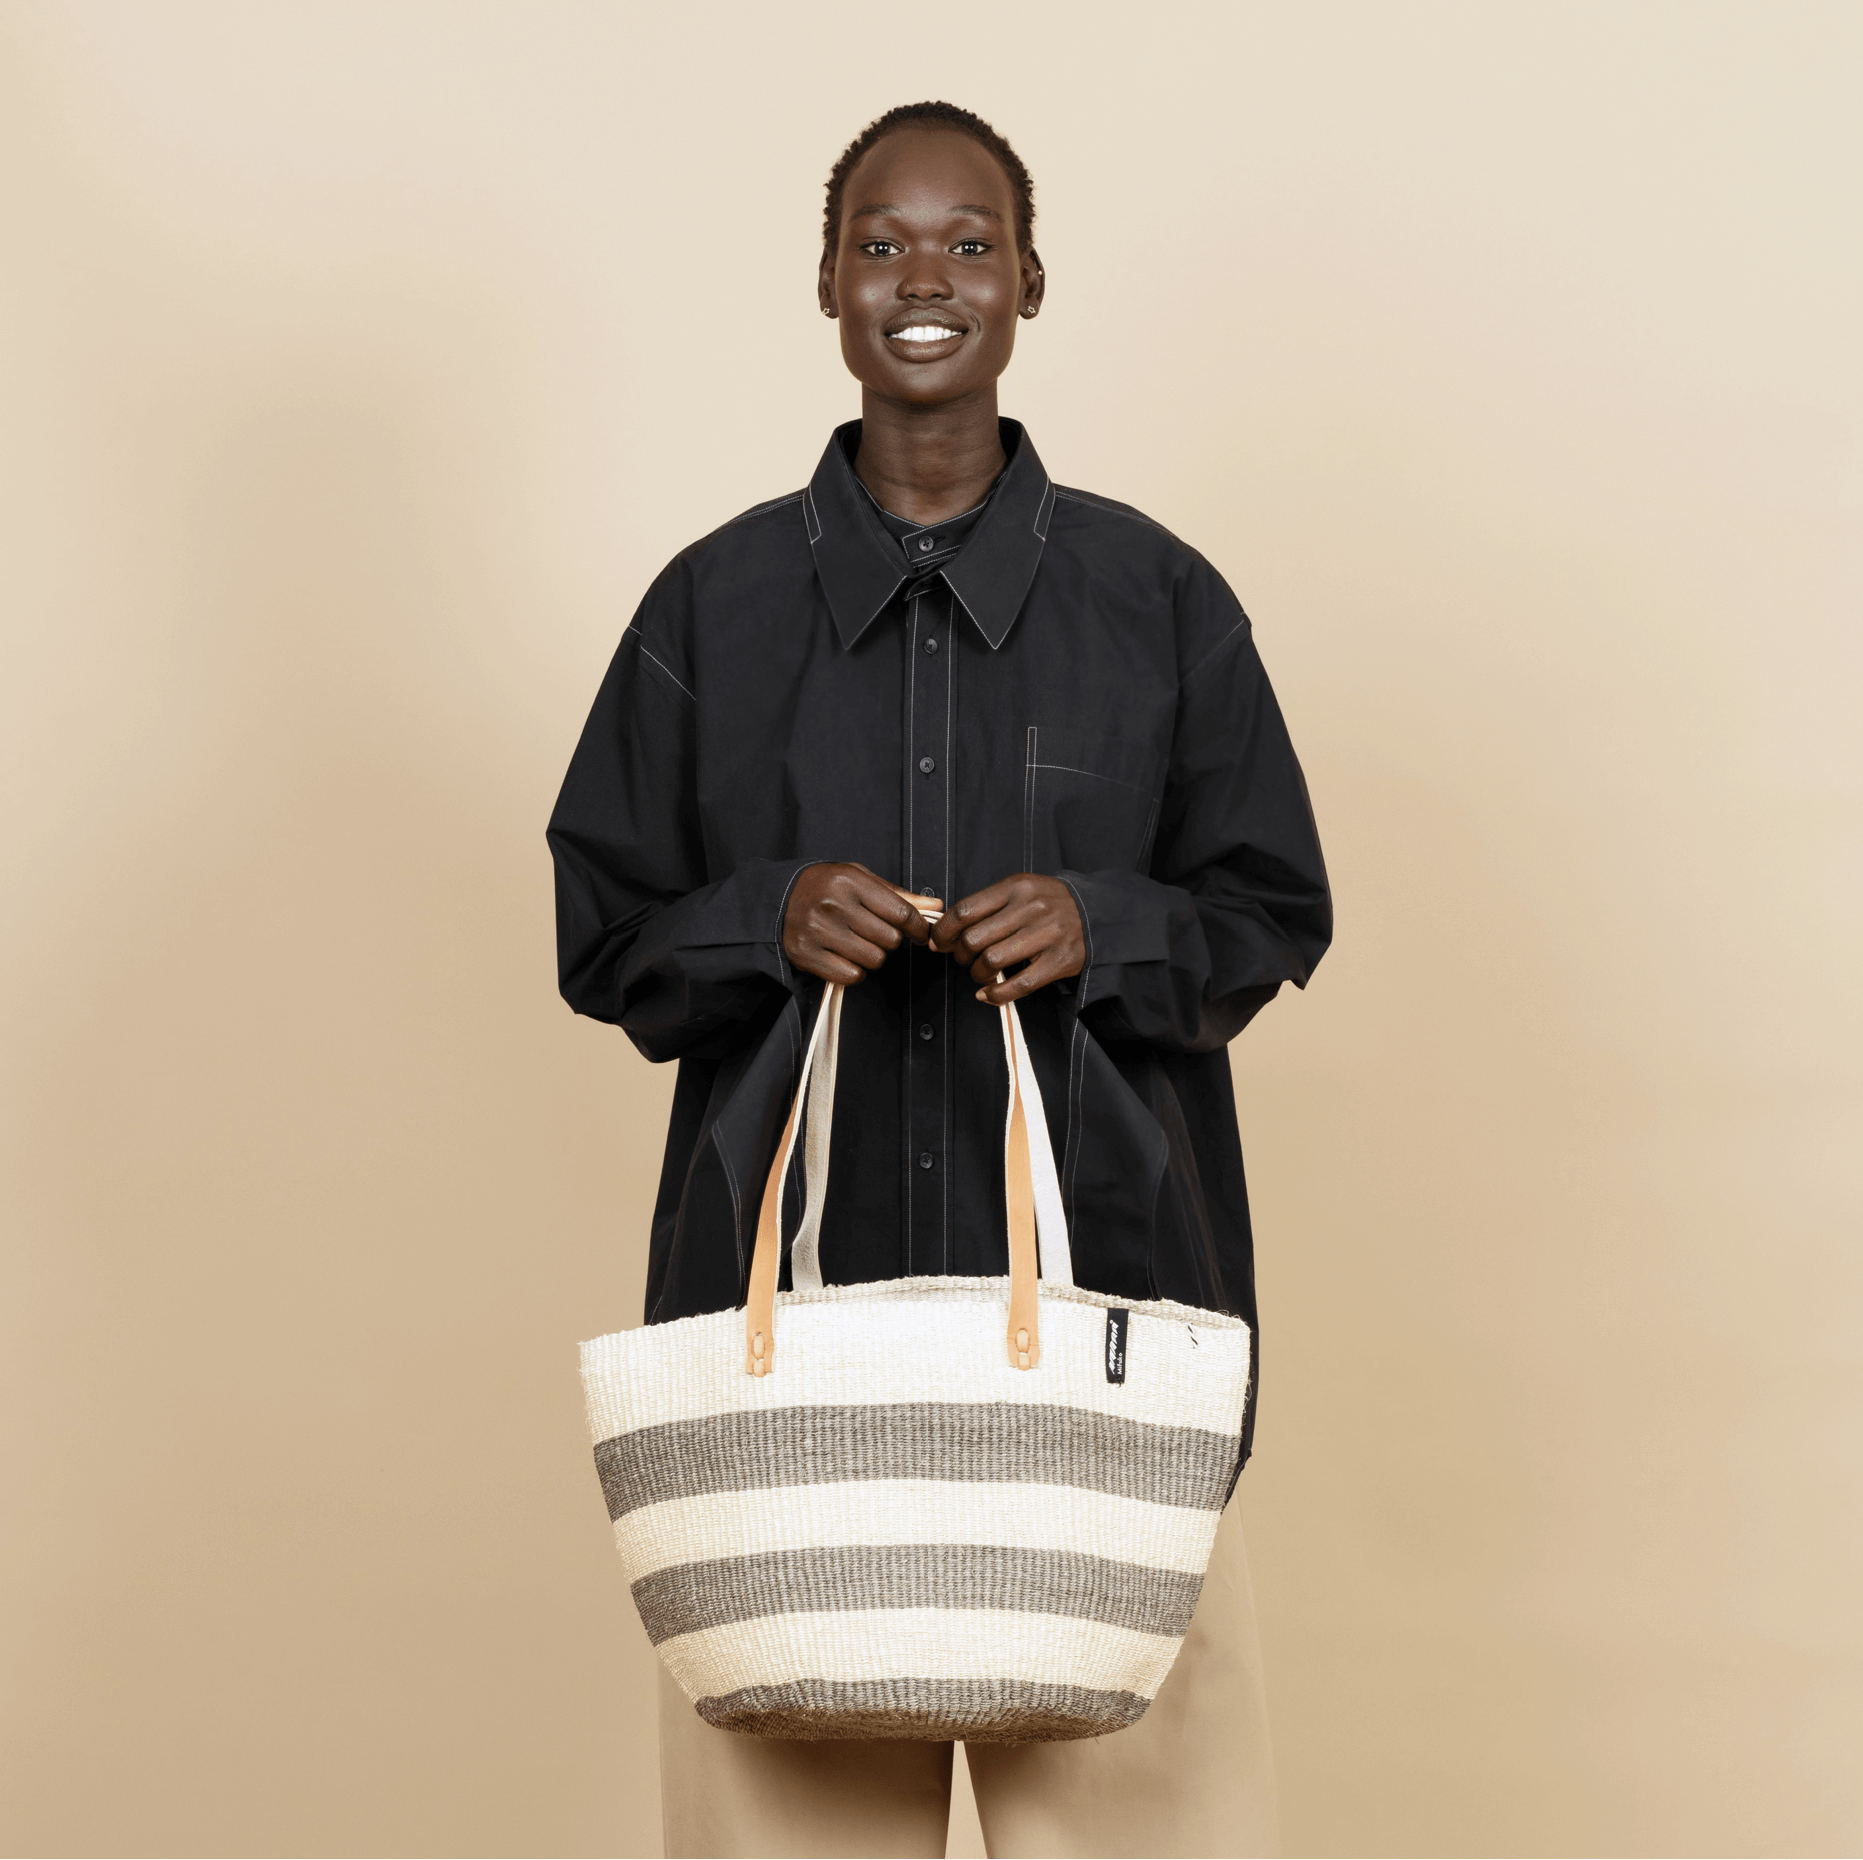 Mifuko Sisal Shopper basket M Kiondo shopper basket | Light grey stripes M